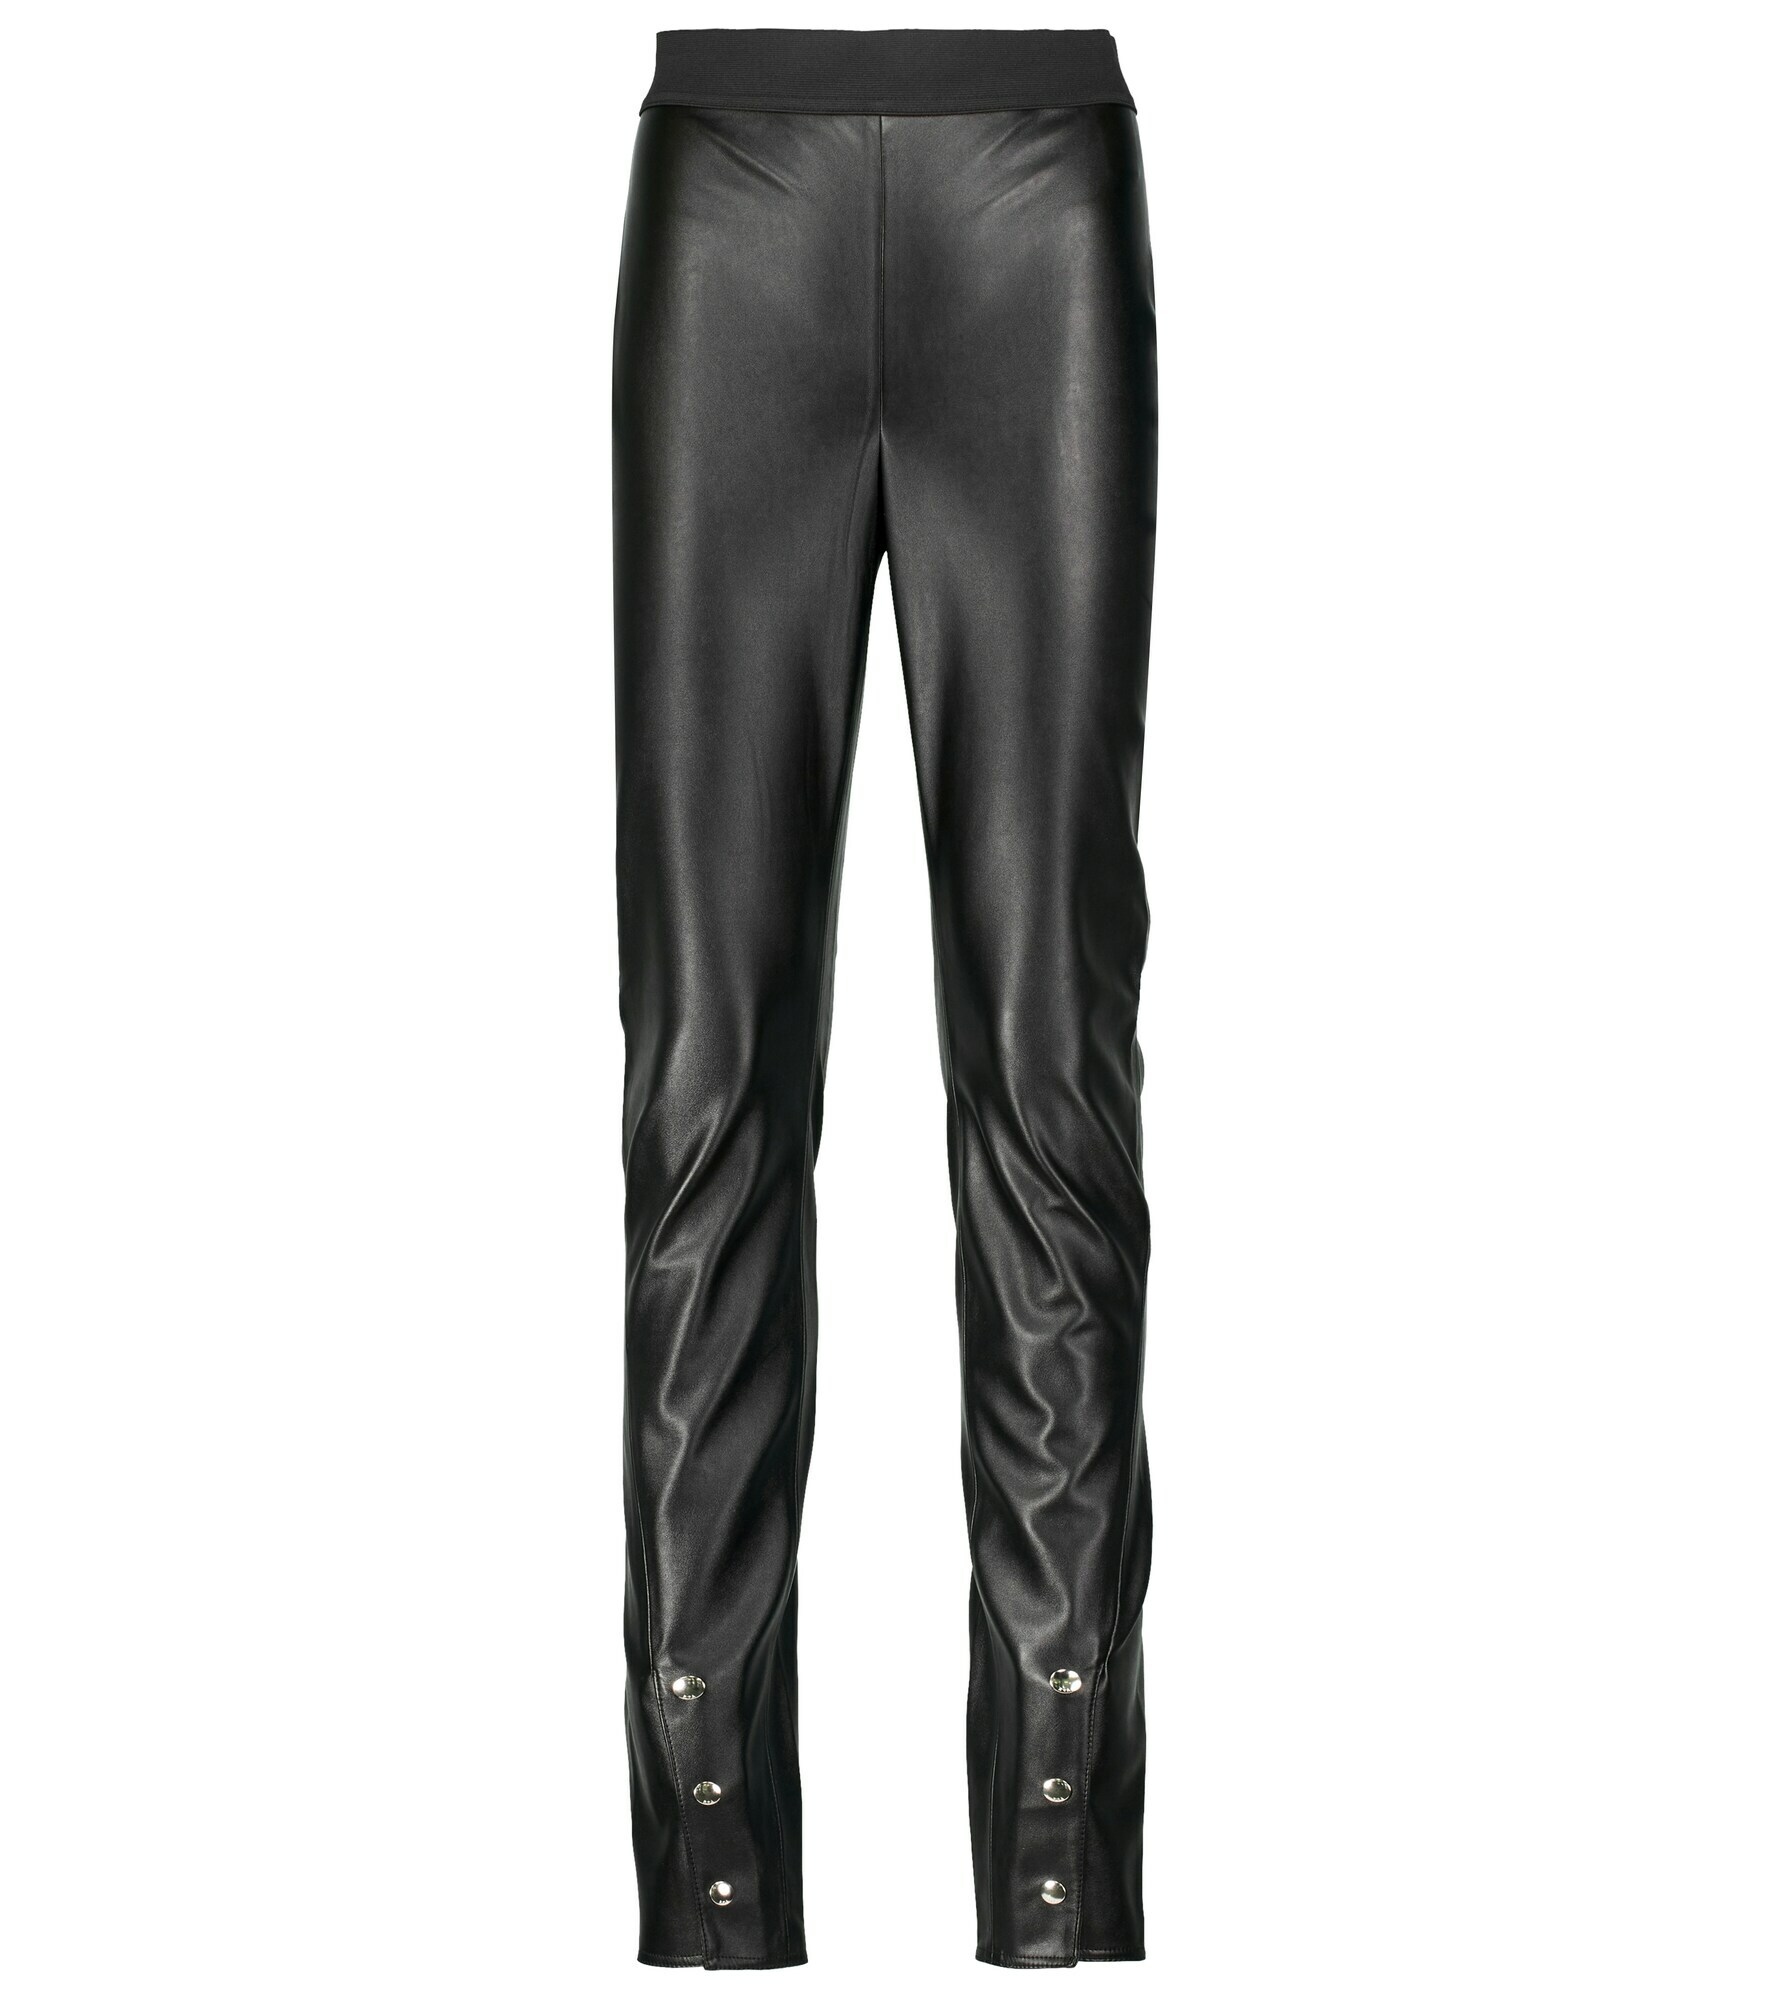 Rta - Maelee high-rise faux leather leggings RtA